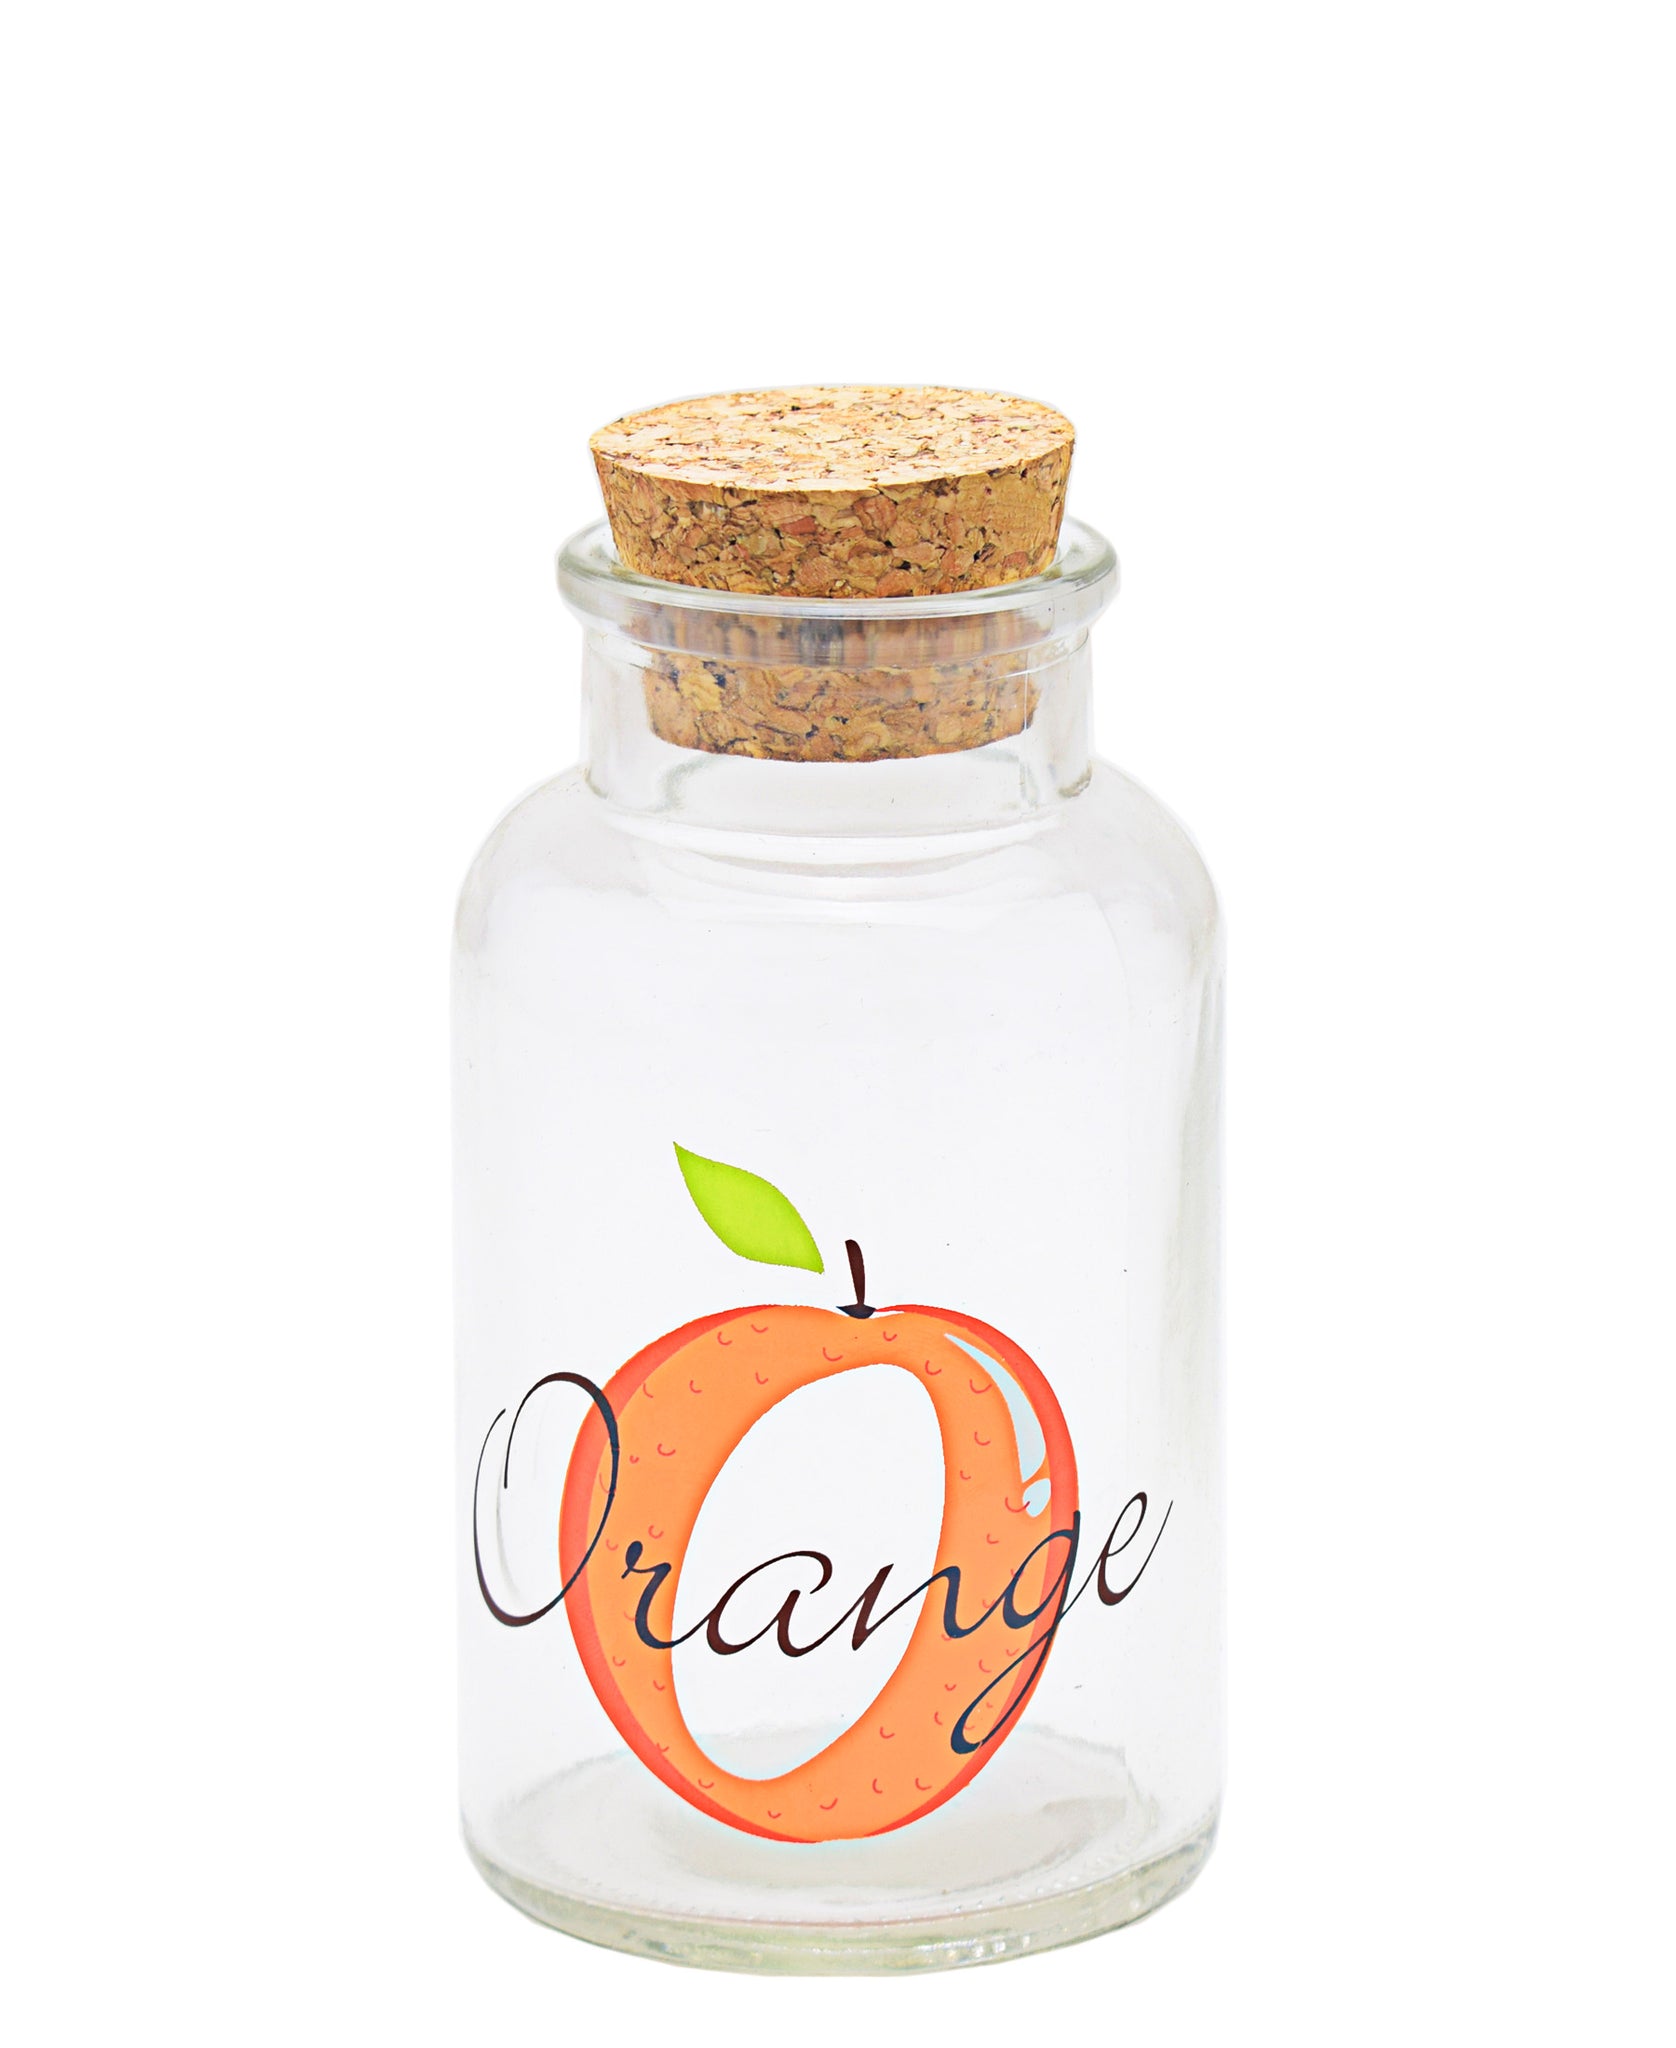 LAV Orange Jar With Cork Lid - Clear